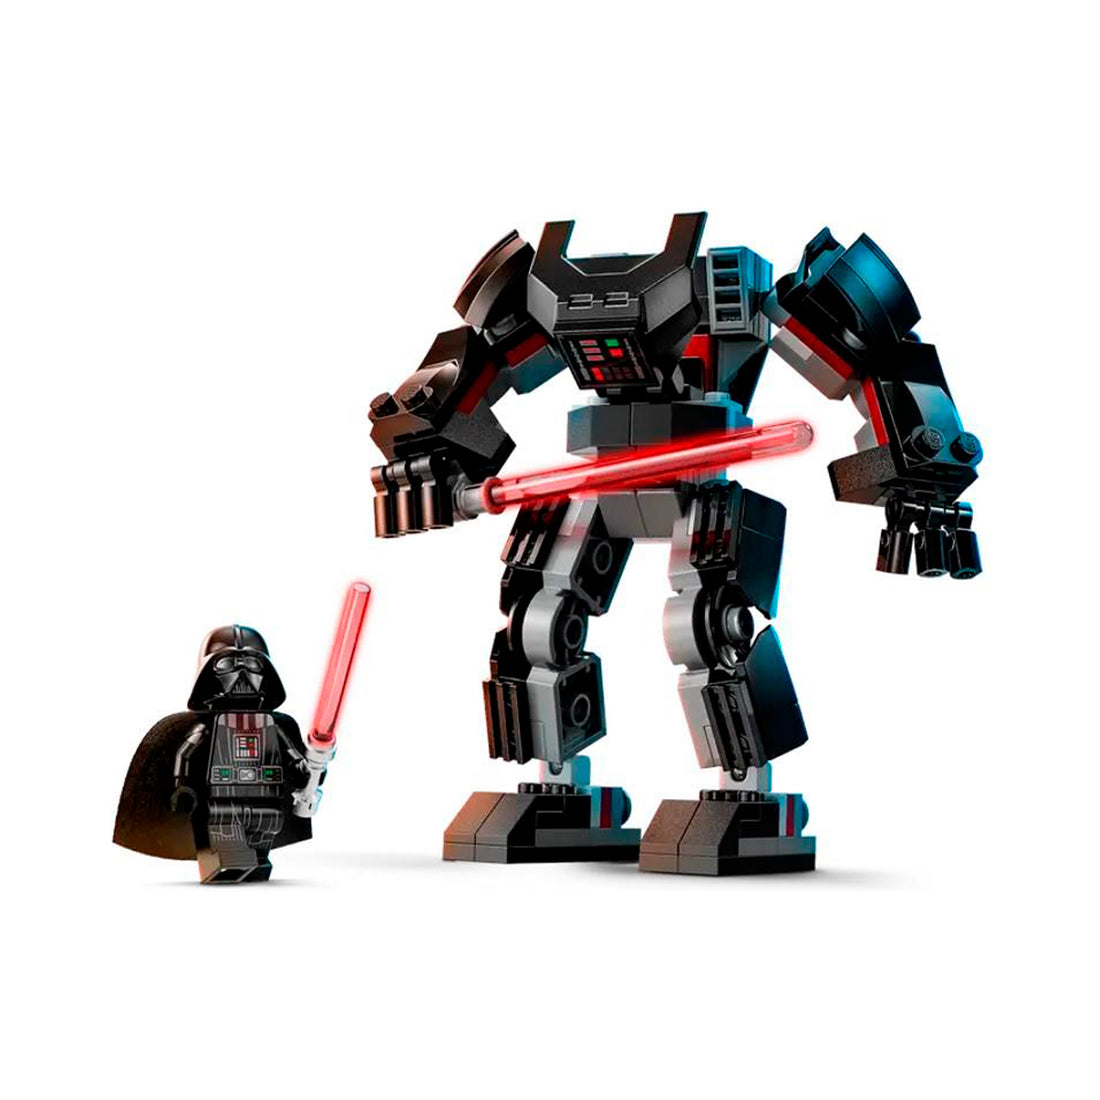 Lego Star Wars Robô do Darth Vader